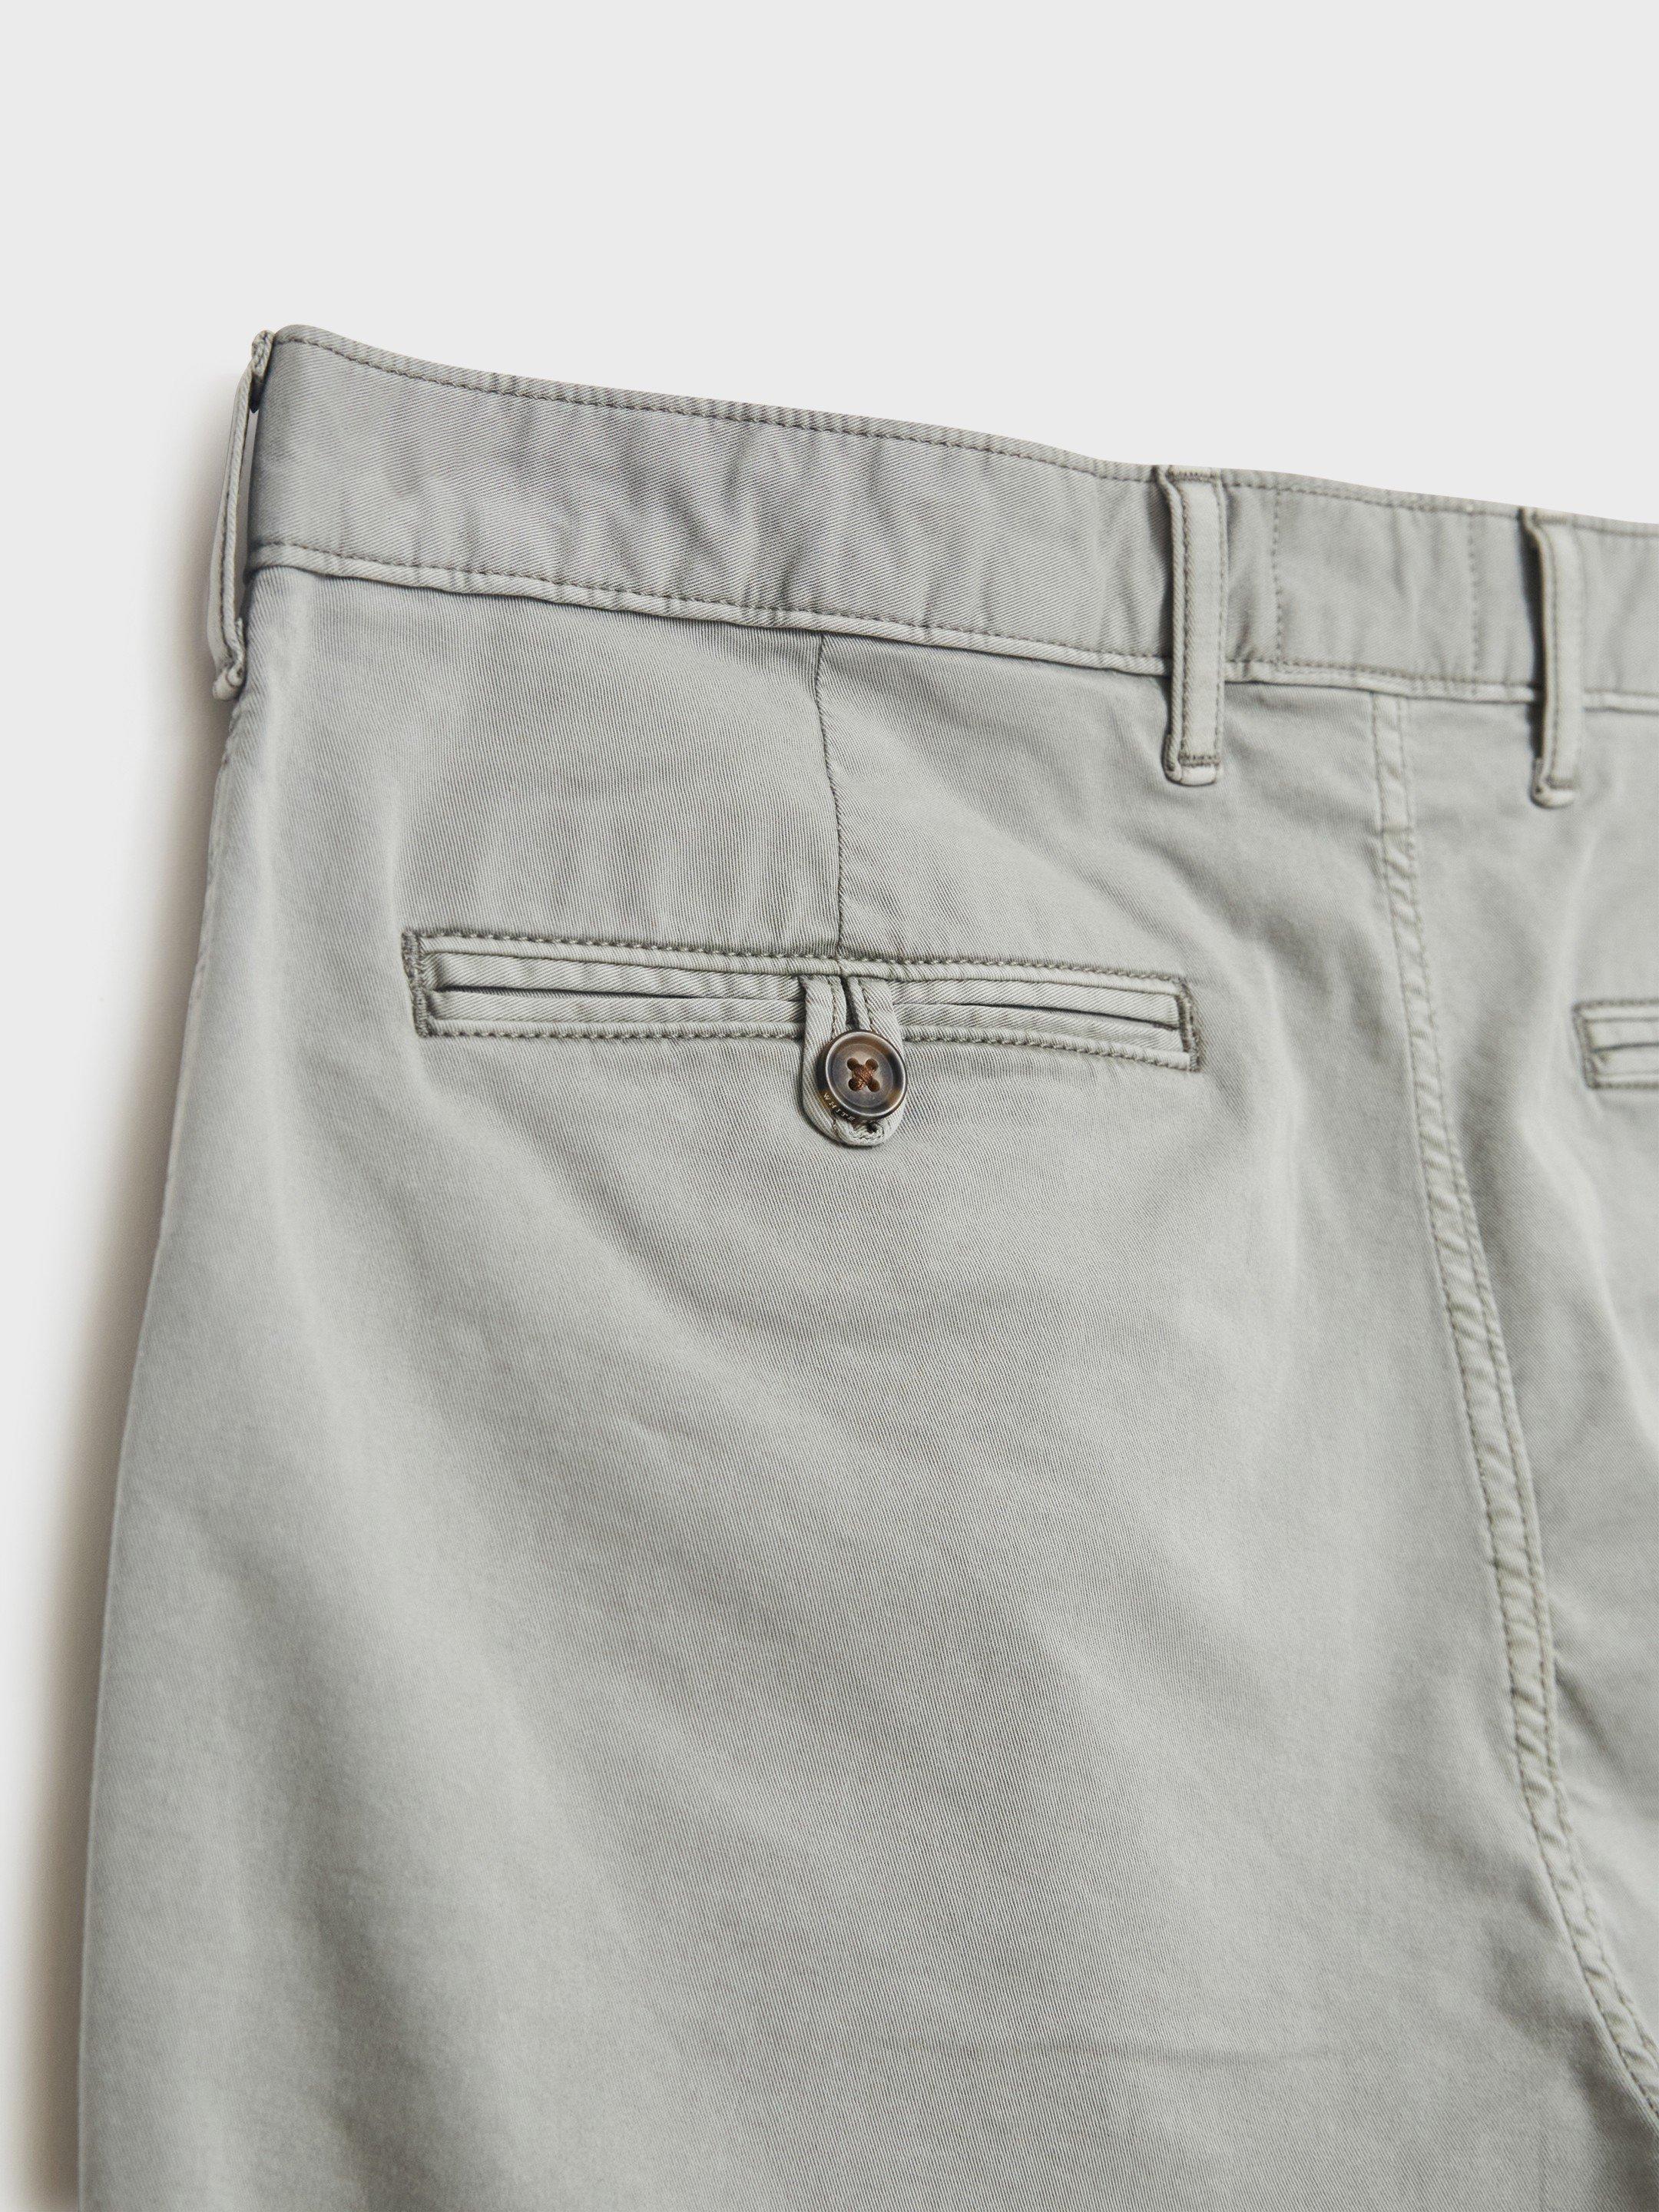 Sutton Organic Chino Shorts in LGT GREY - FLAT DETAIL